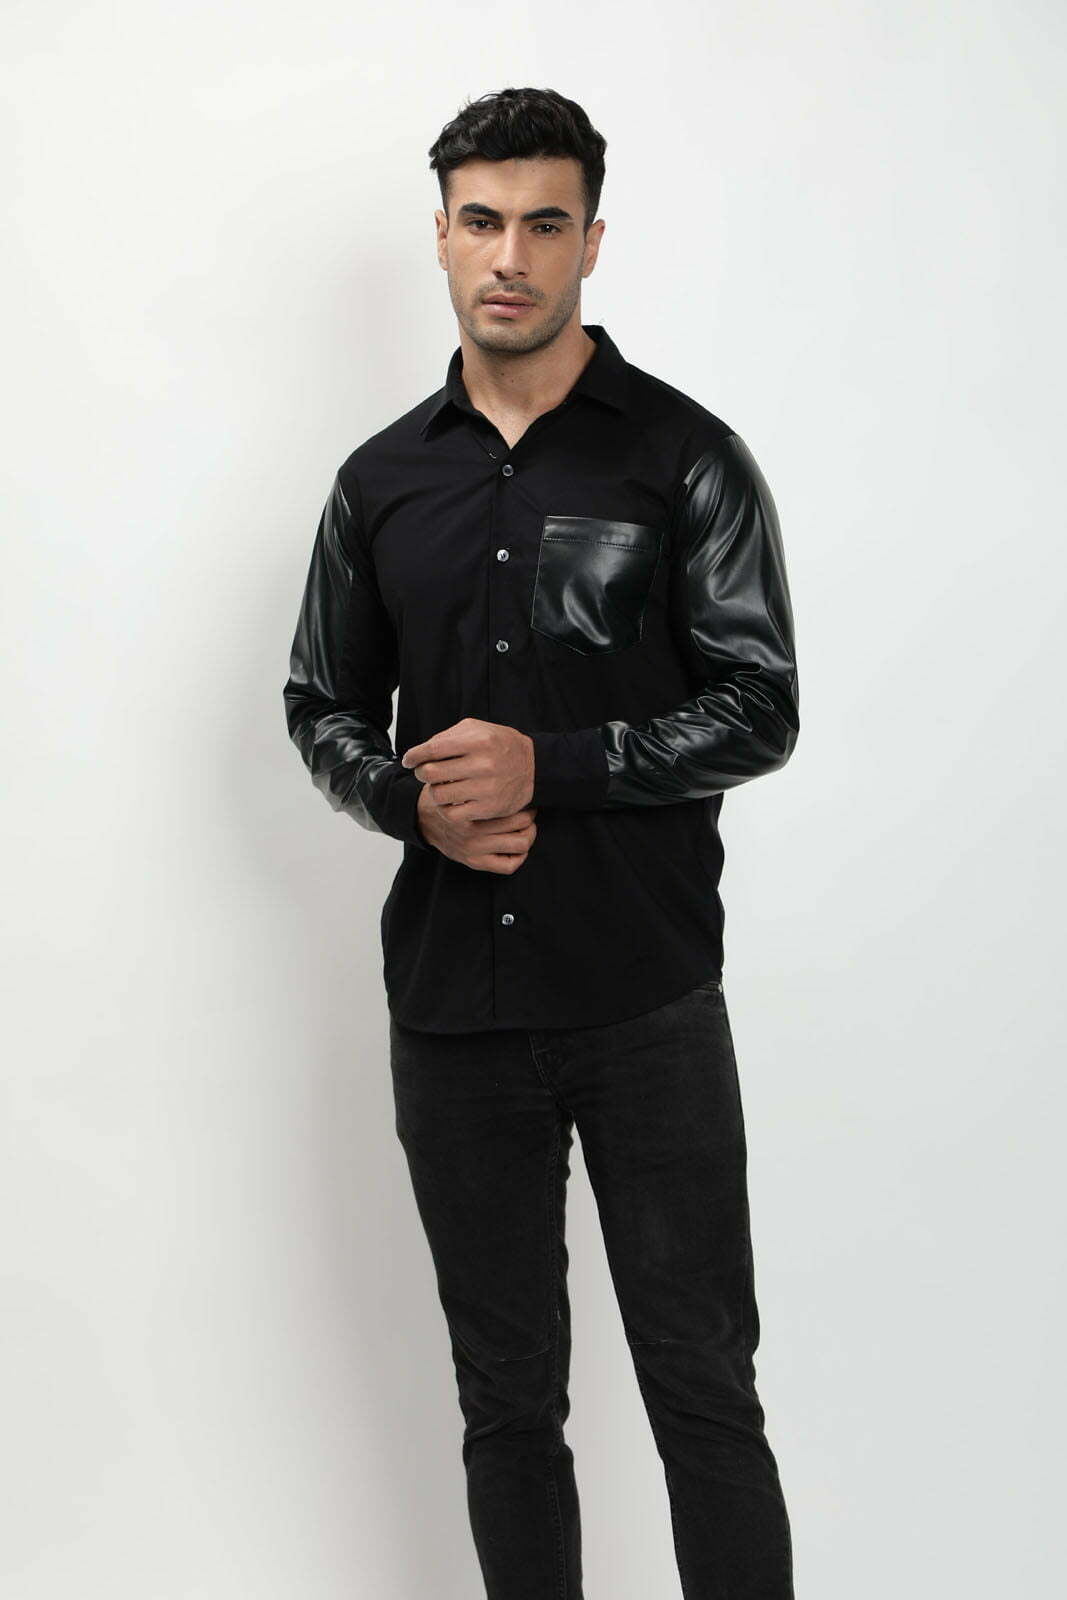 Stylish Black Retro Shirt